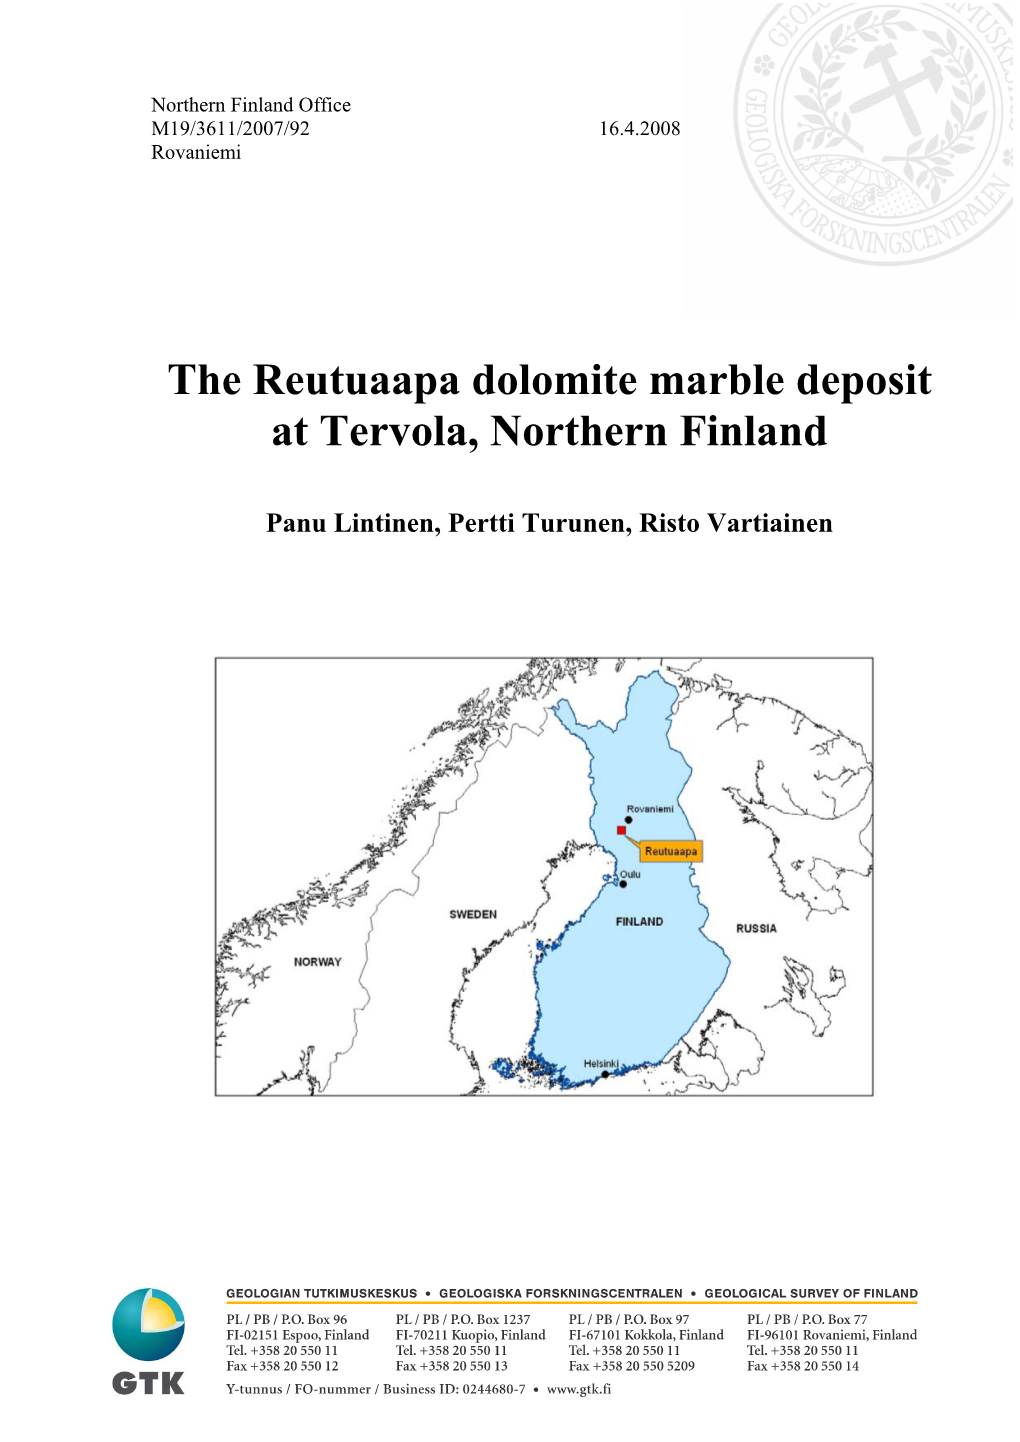 The Reutuaapa Dolomite Marble Deposit at Tervola, Northern Finland